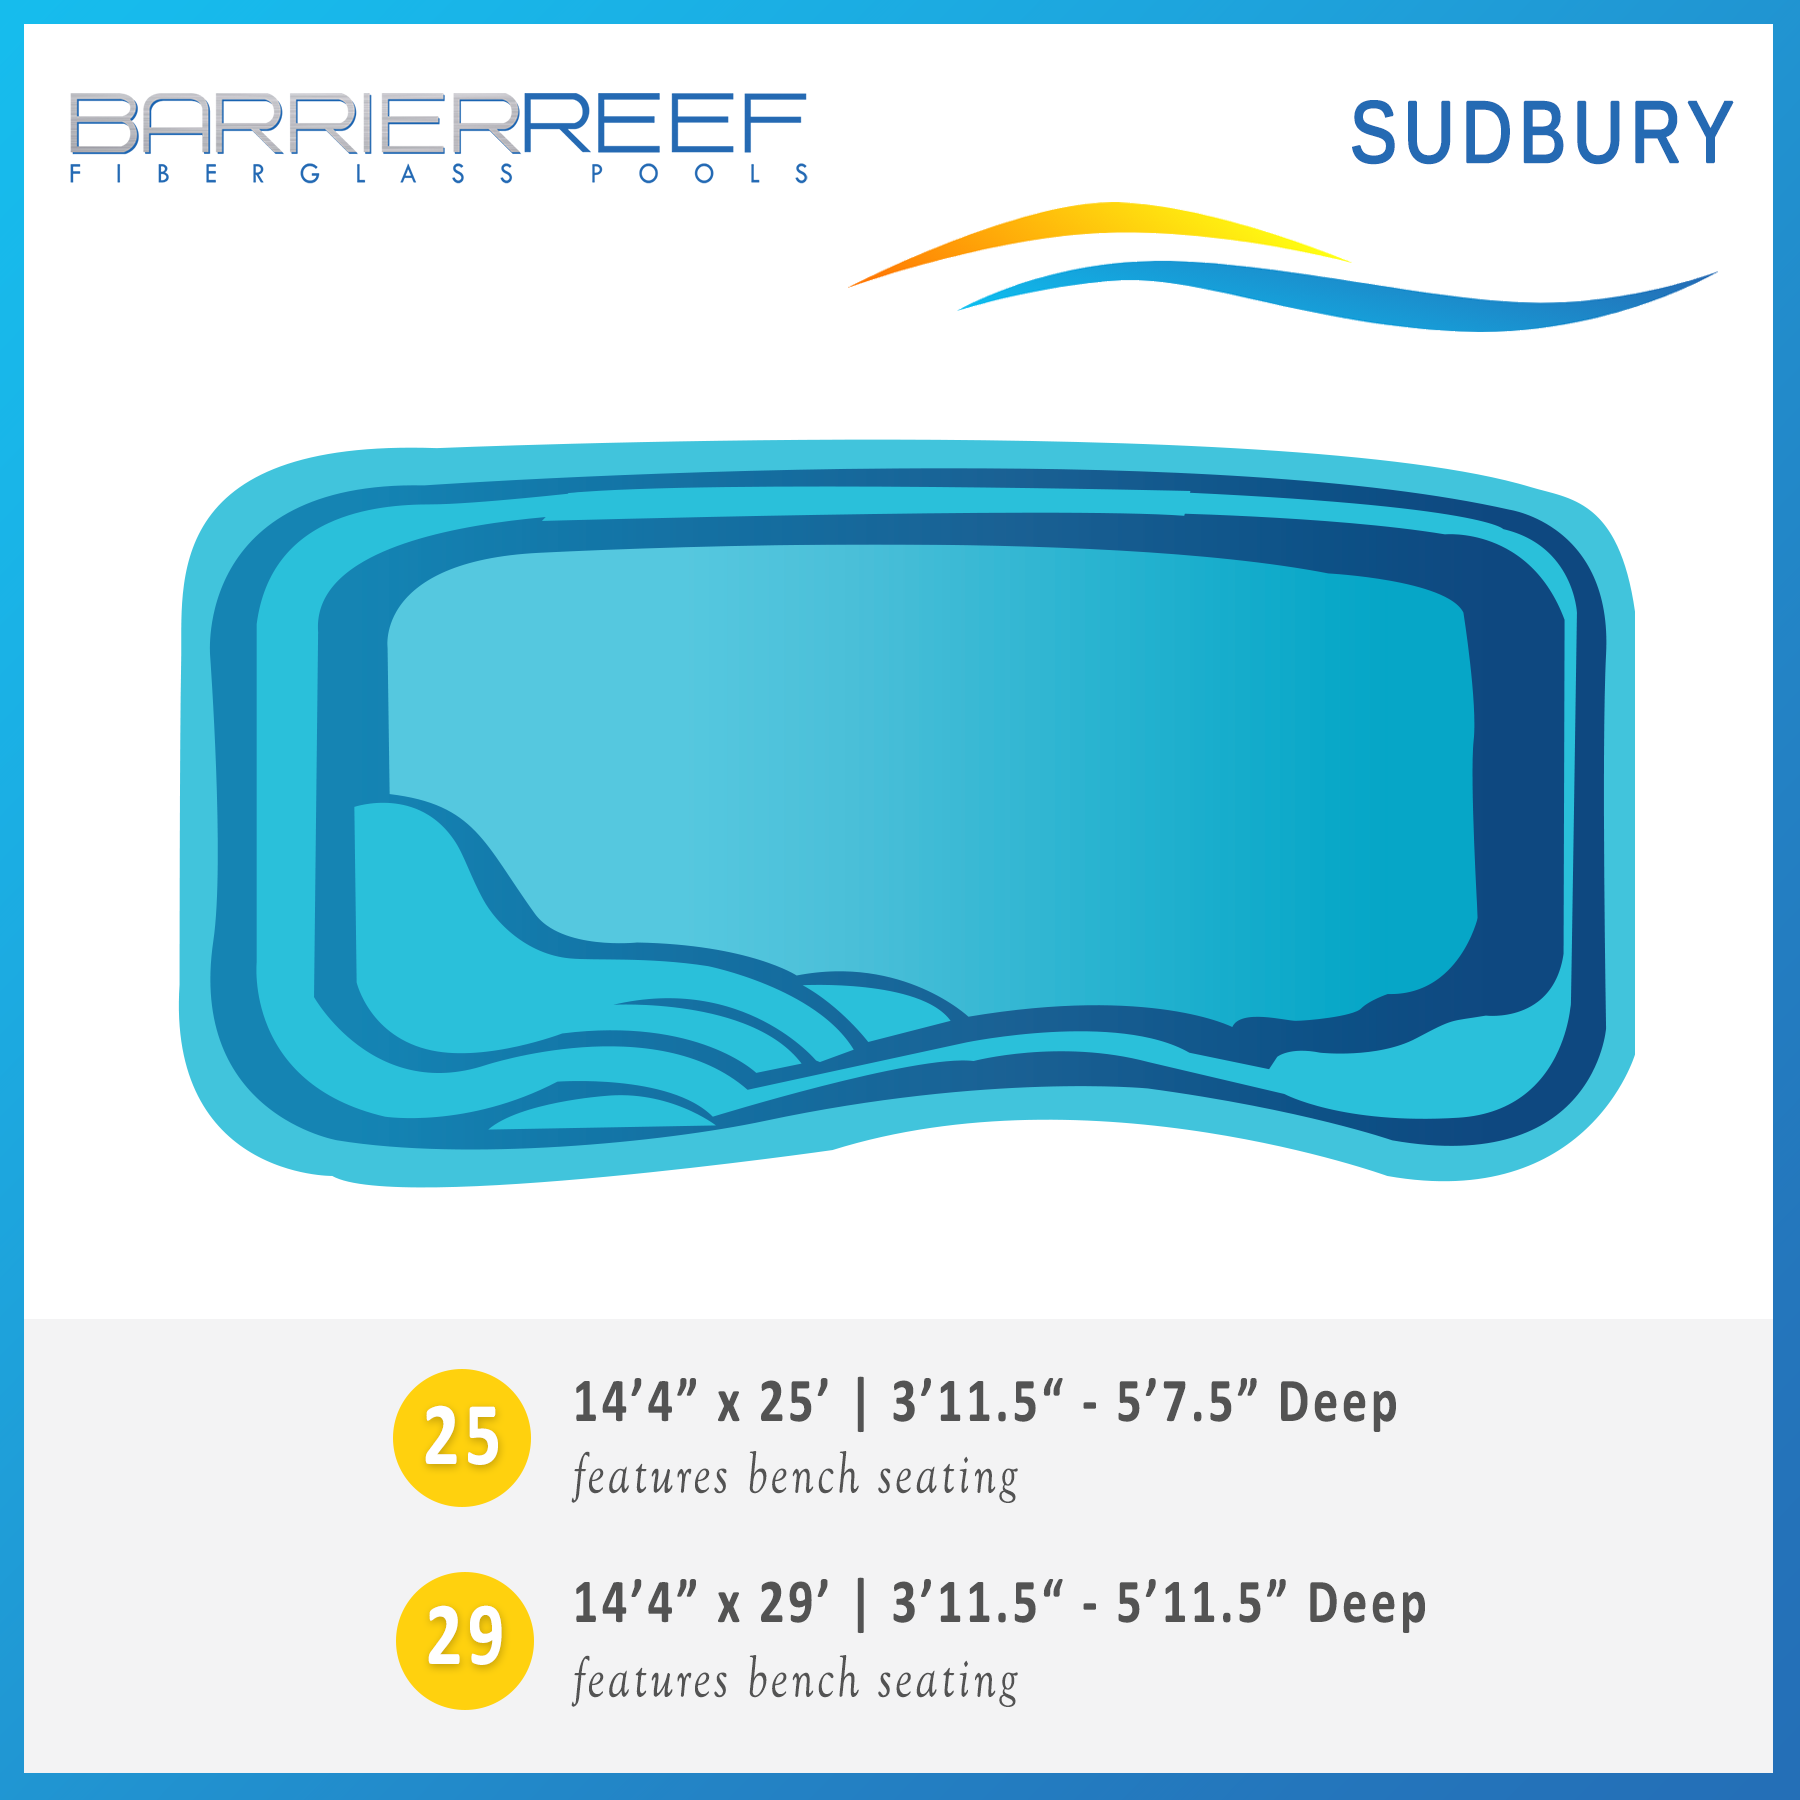 Sudbury Barrier Reef Fiberglass Pool